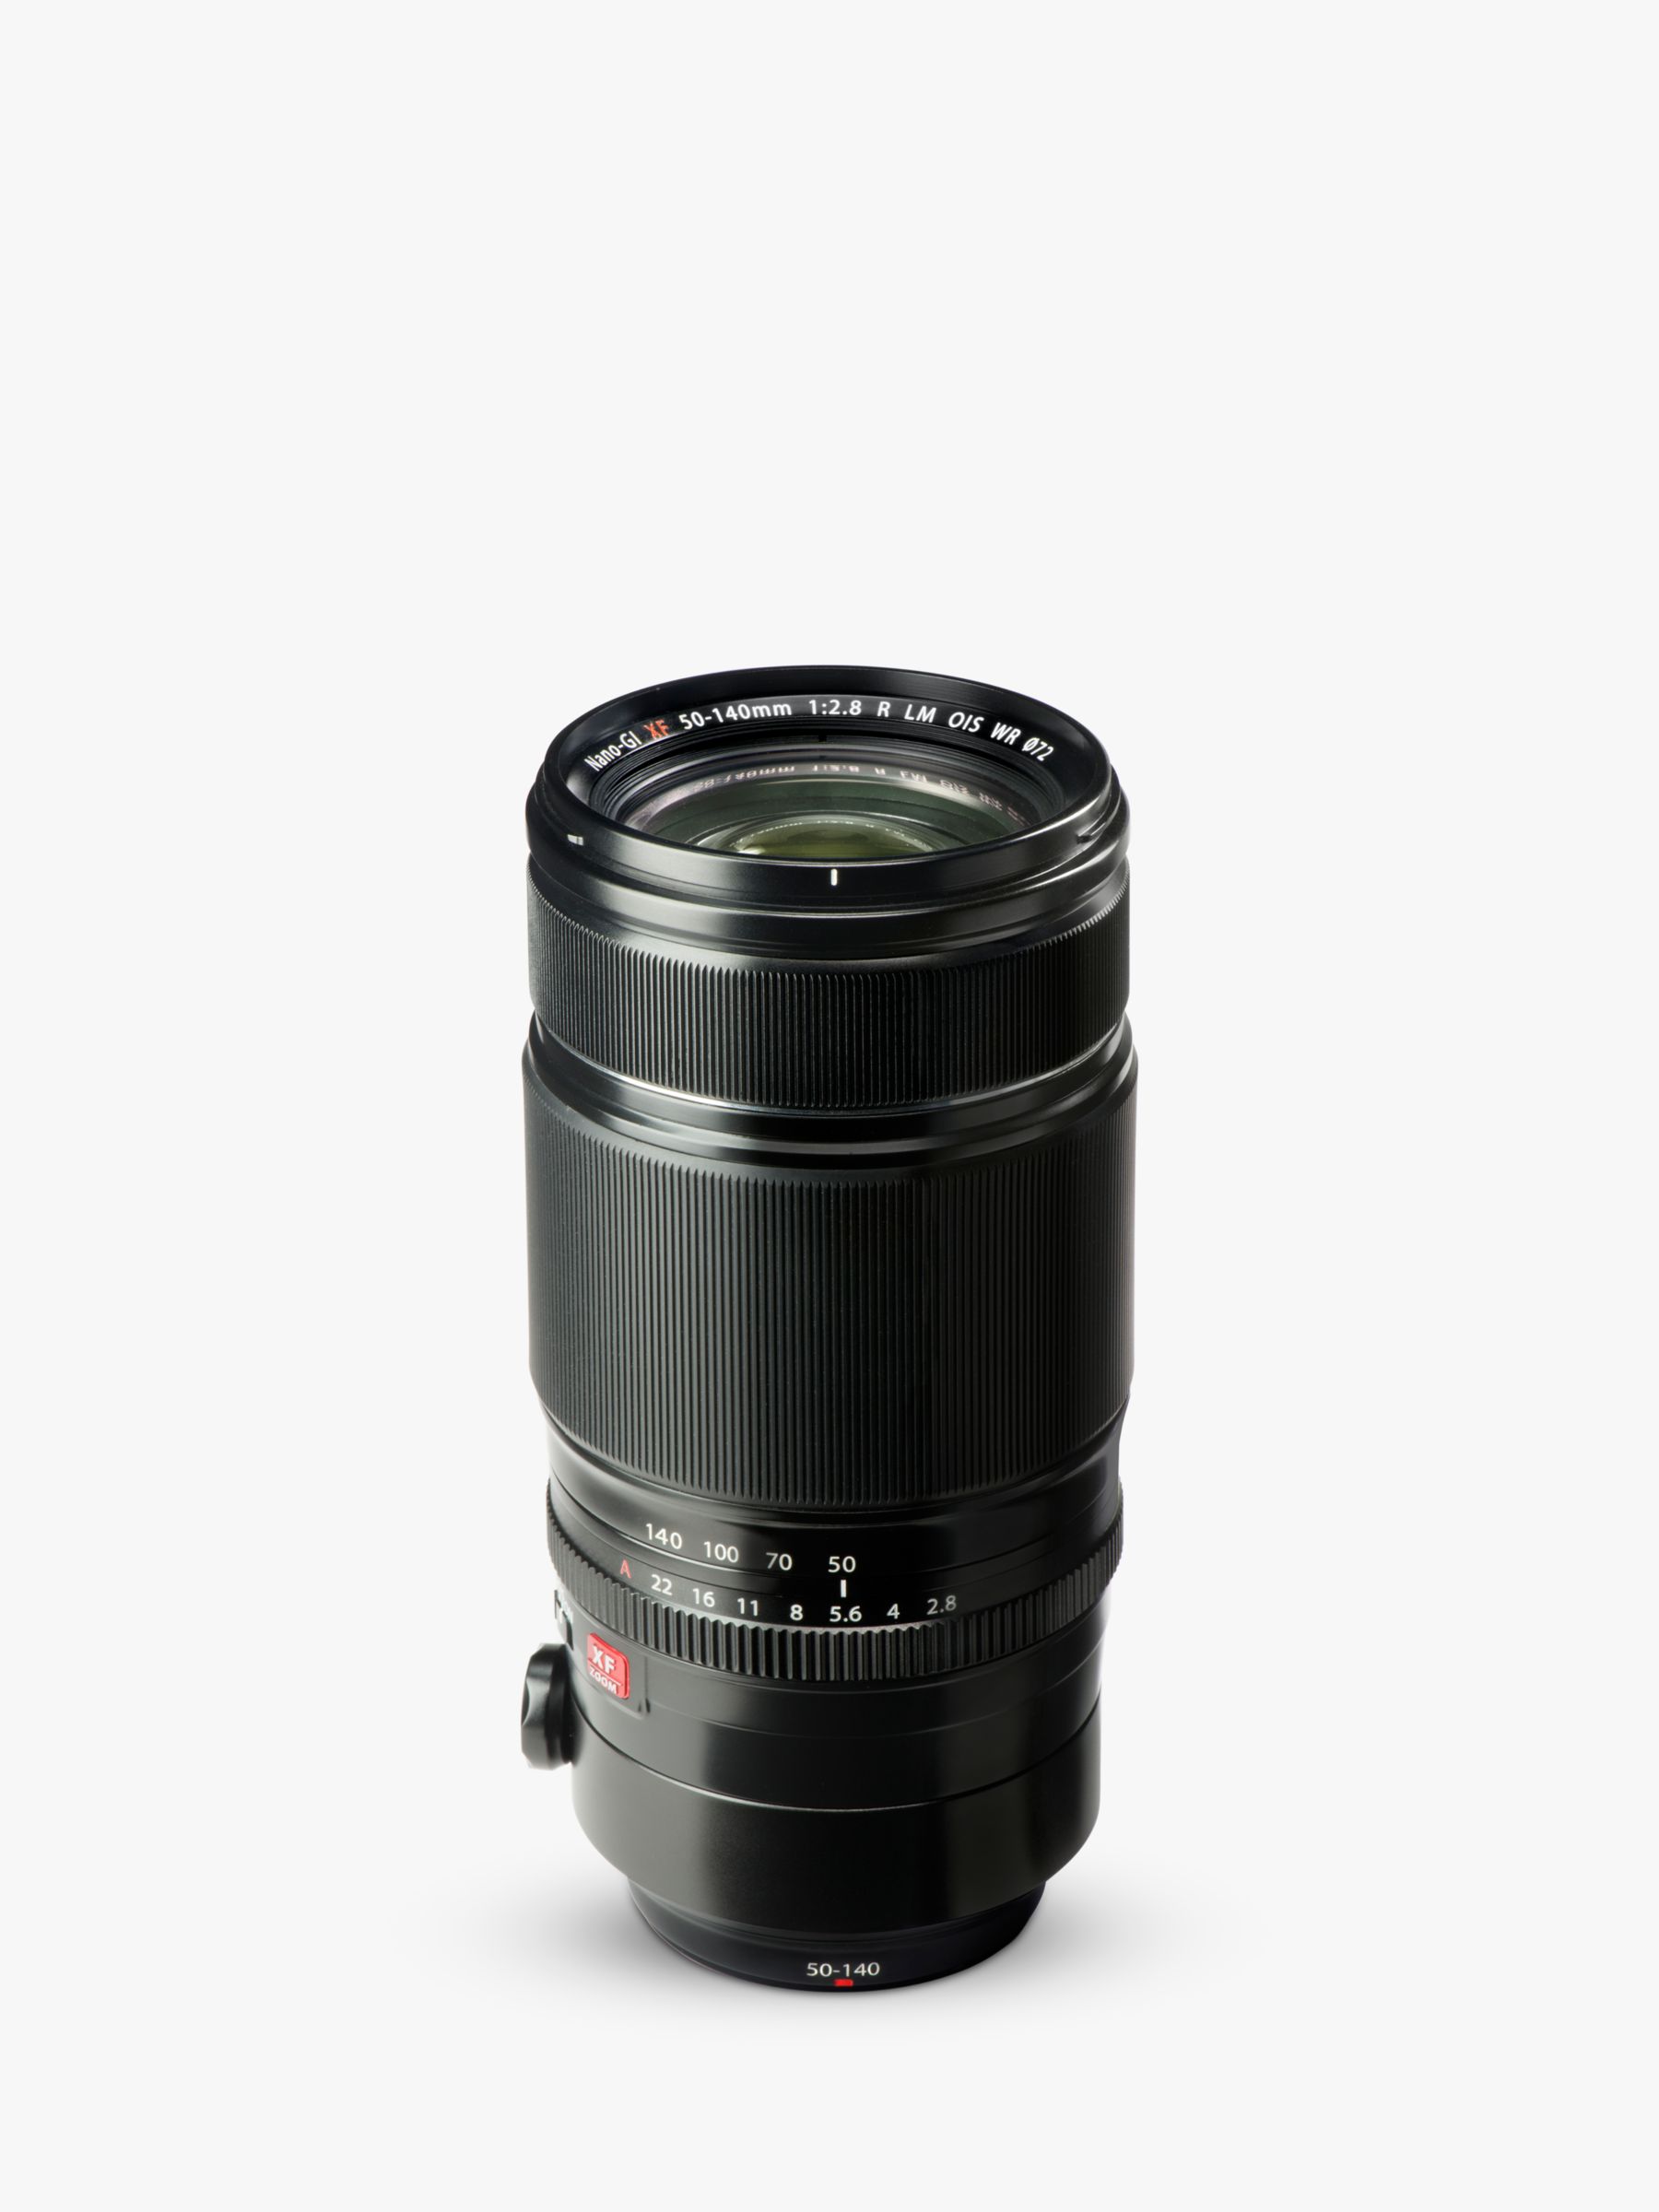 Image of Fujifilm XF50140mm F28 R LM OIS WR Telephoto Lens